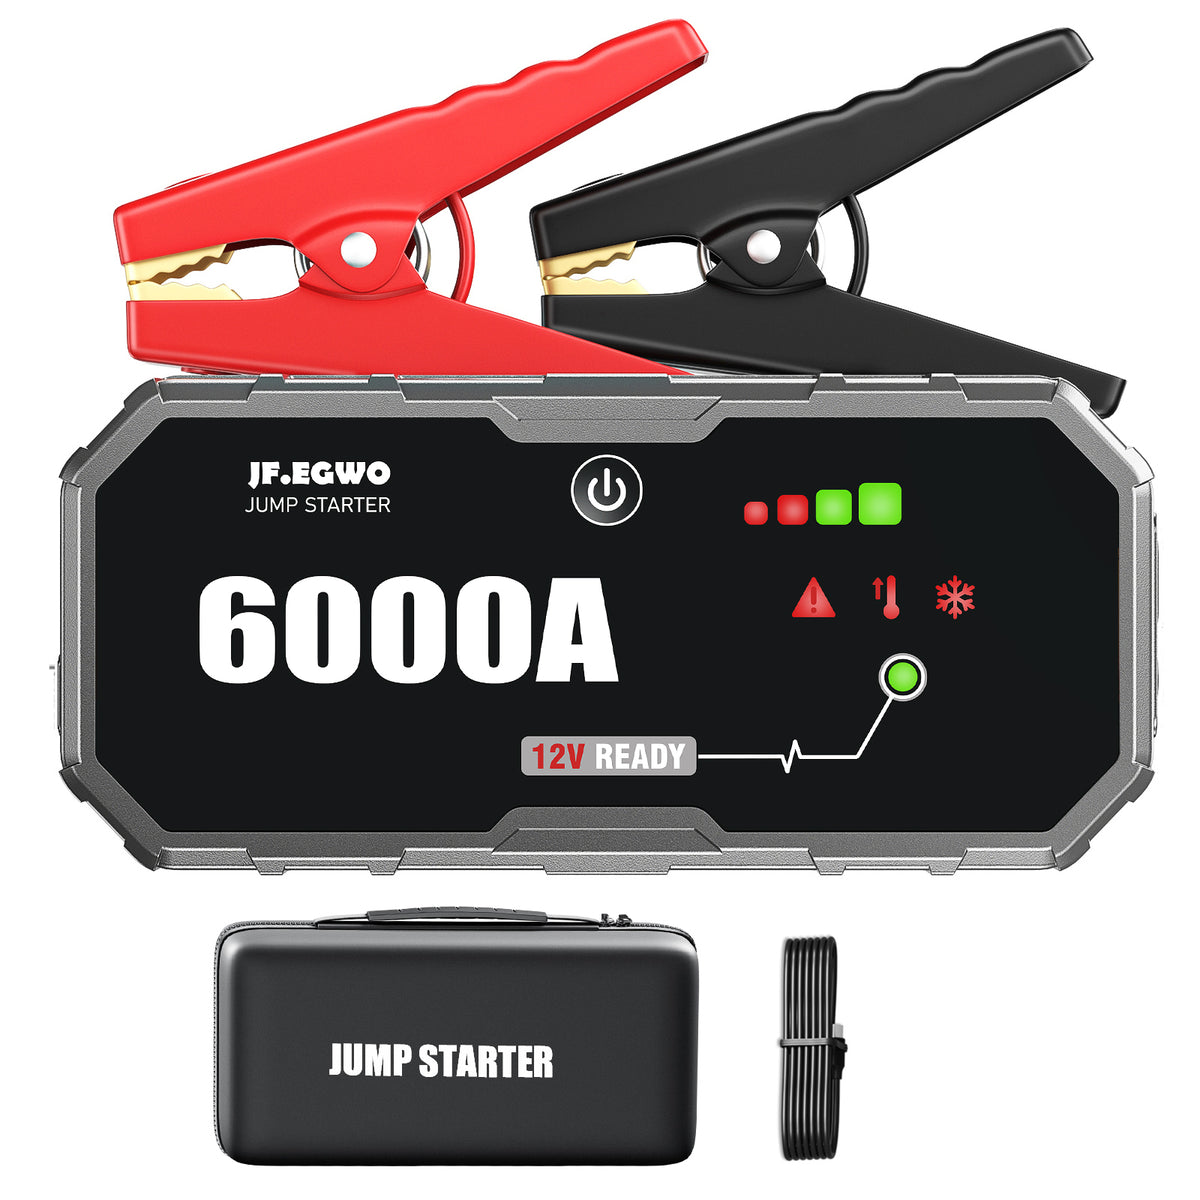 Cargador de batería del arrancador del salto del coche de JFEGWO 6000A